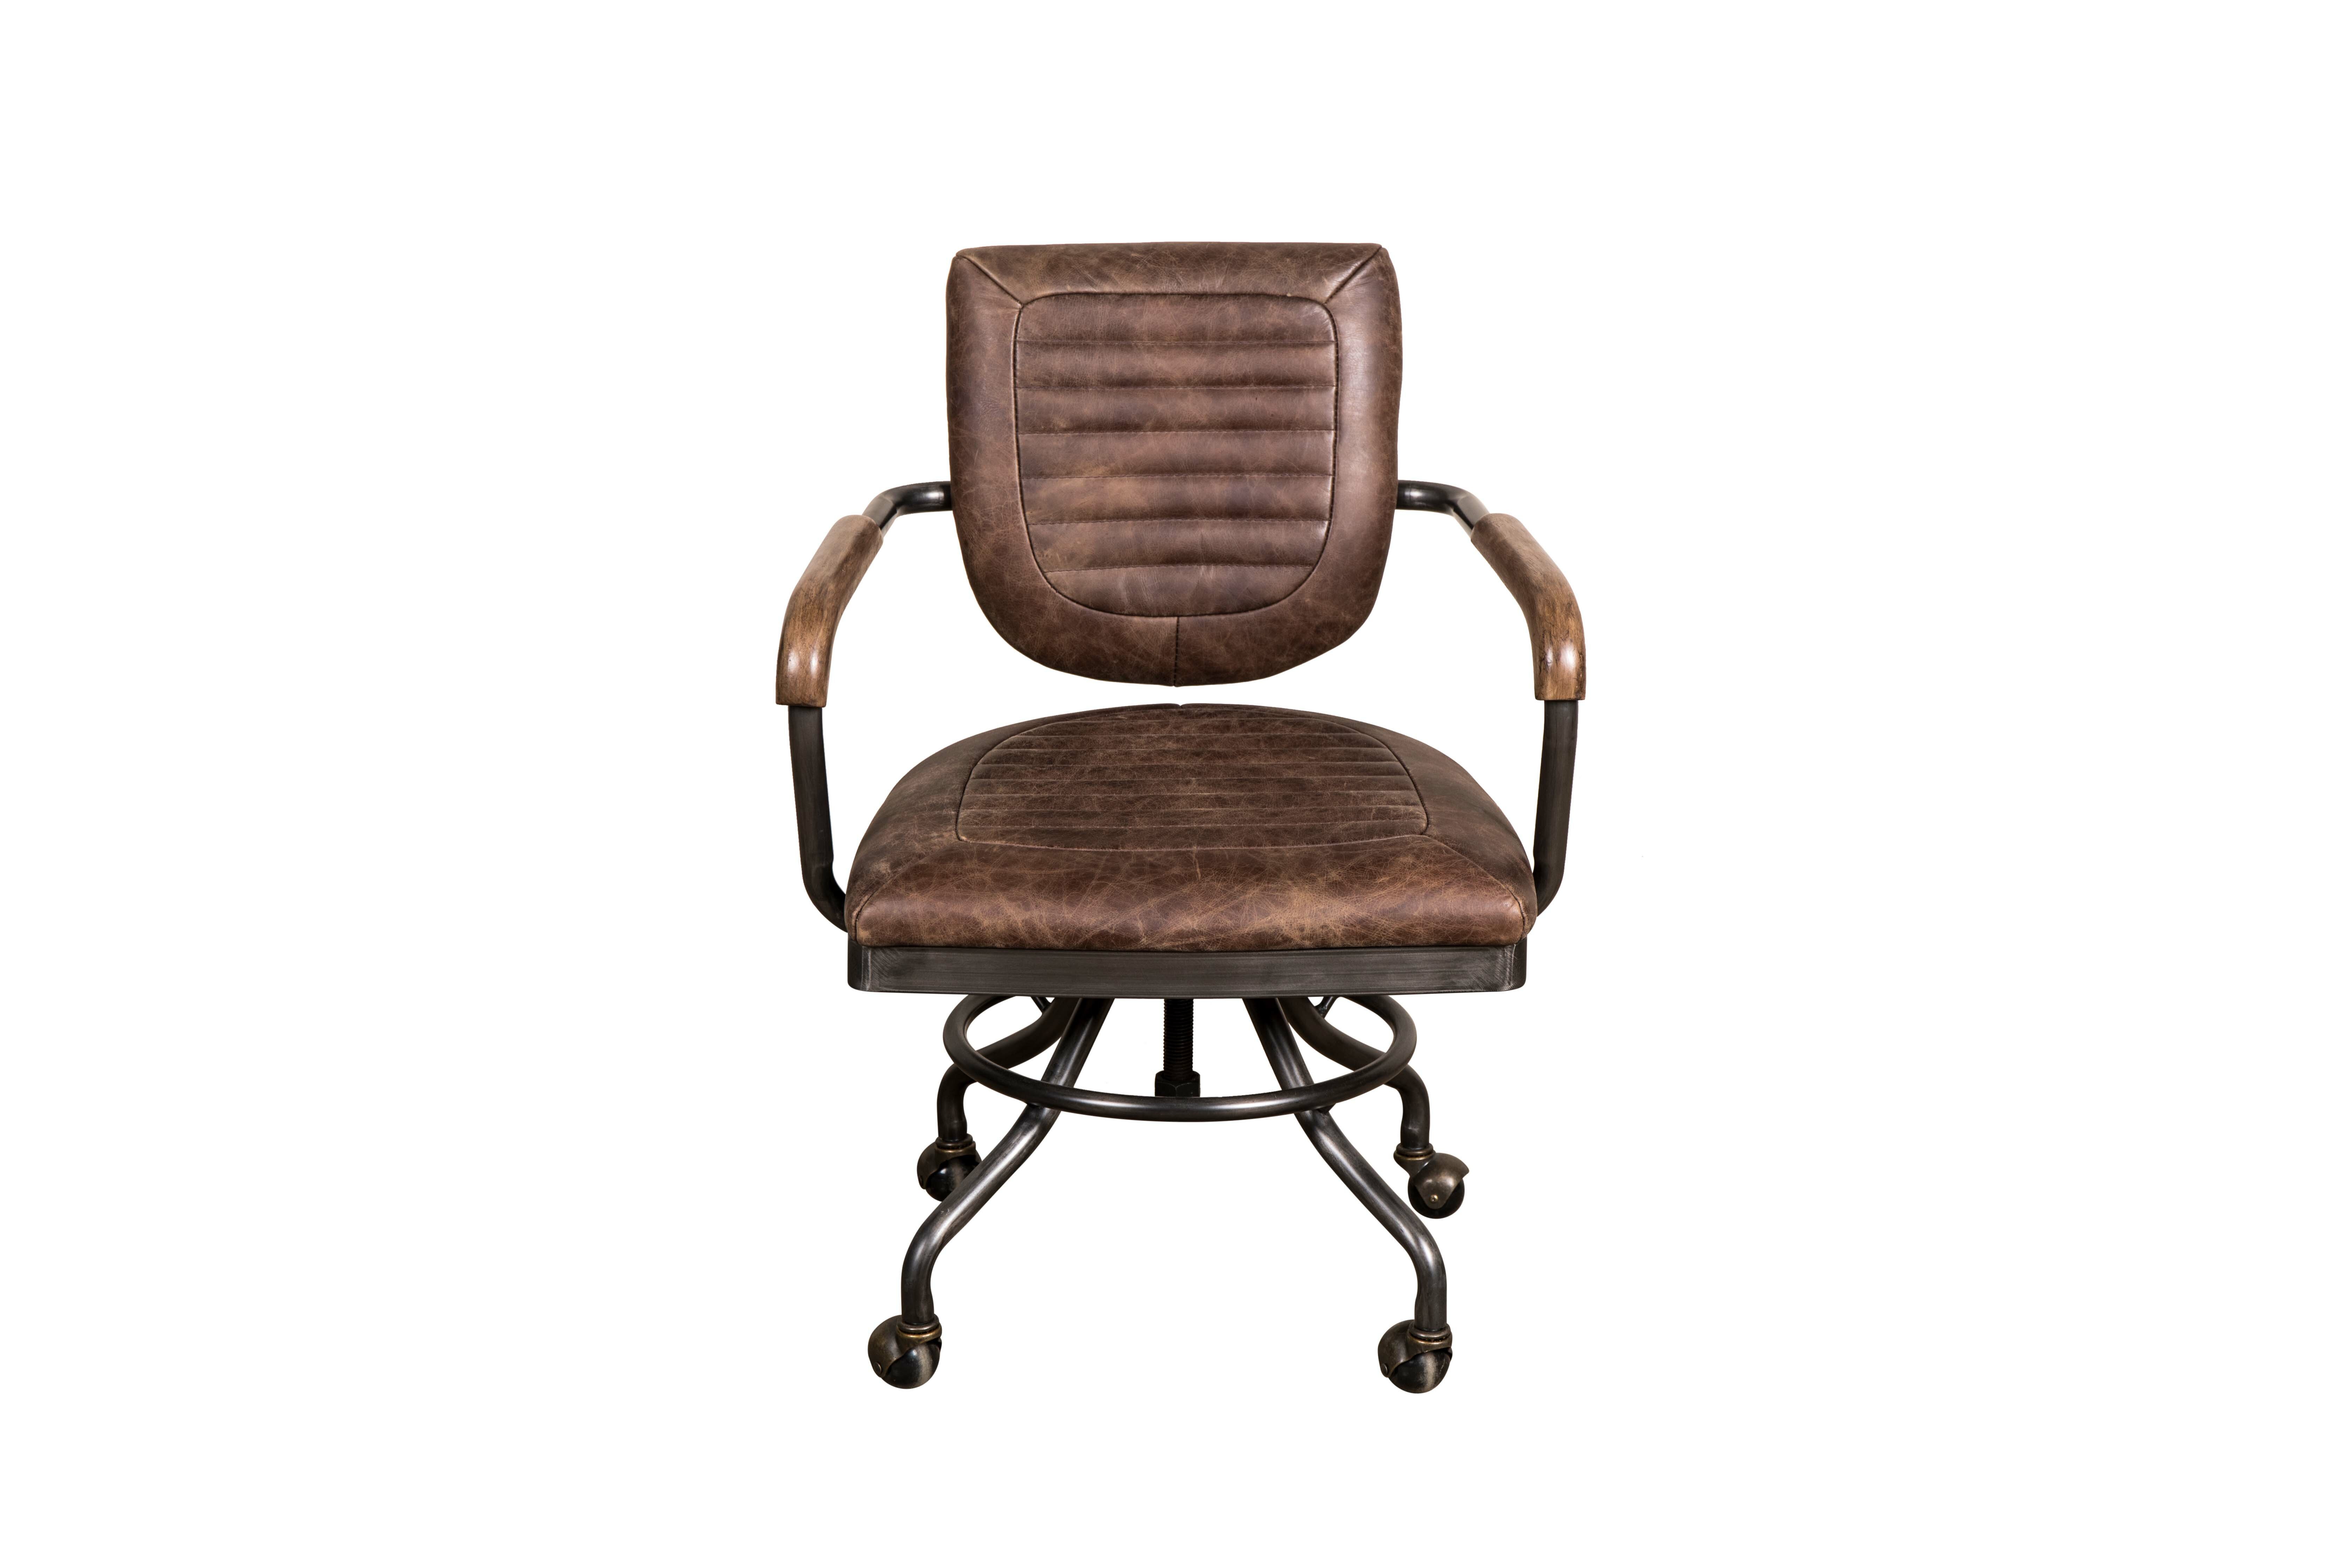 Williston Forge Deatsville Leather Desk Chair Reviews Wayfair Co Uk